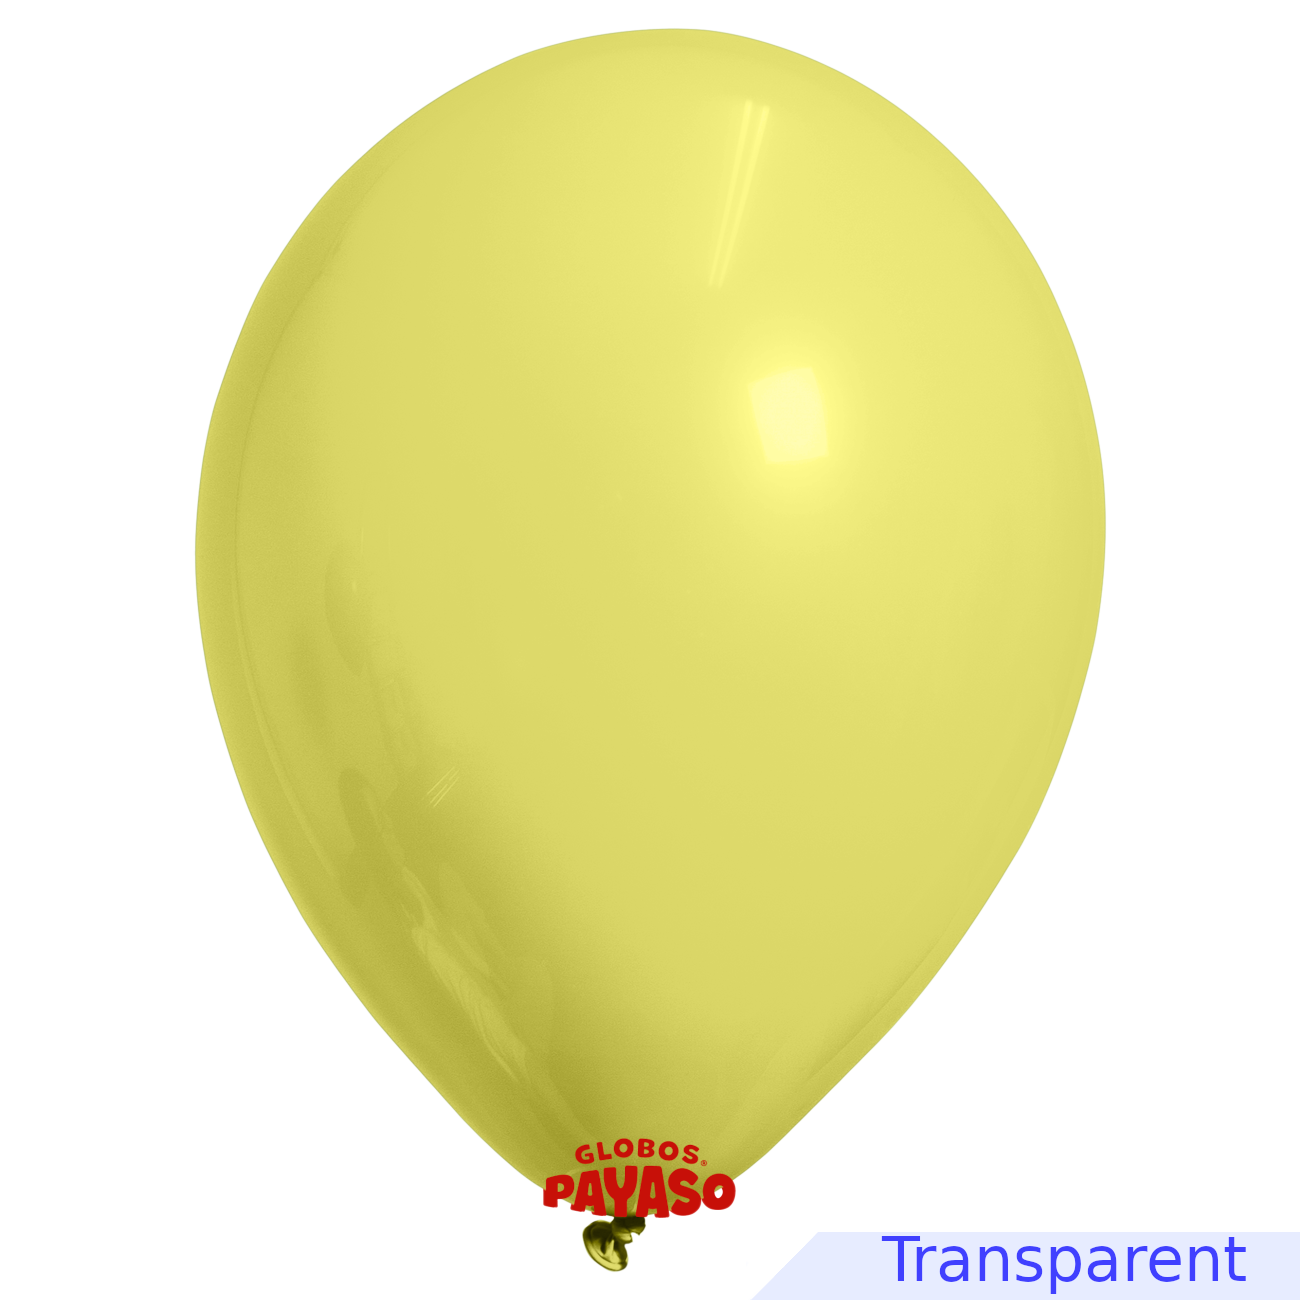 Globos Payaso / Unique 12" Yellow Translucid Decorator Balloon